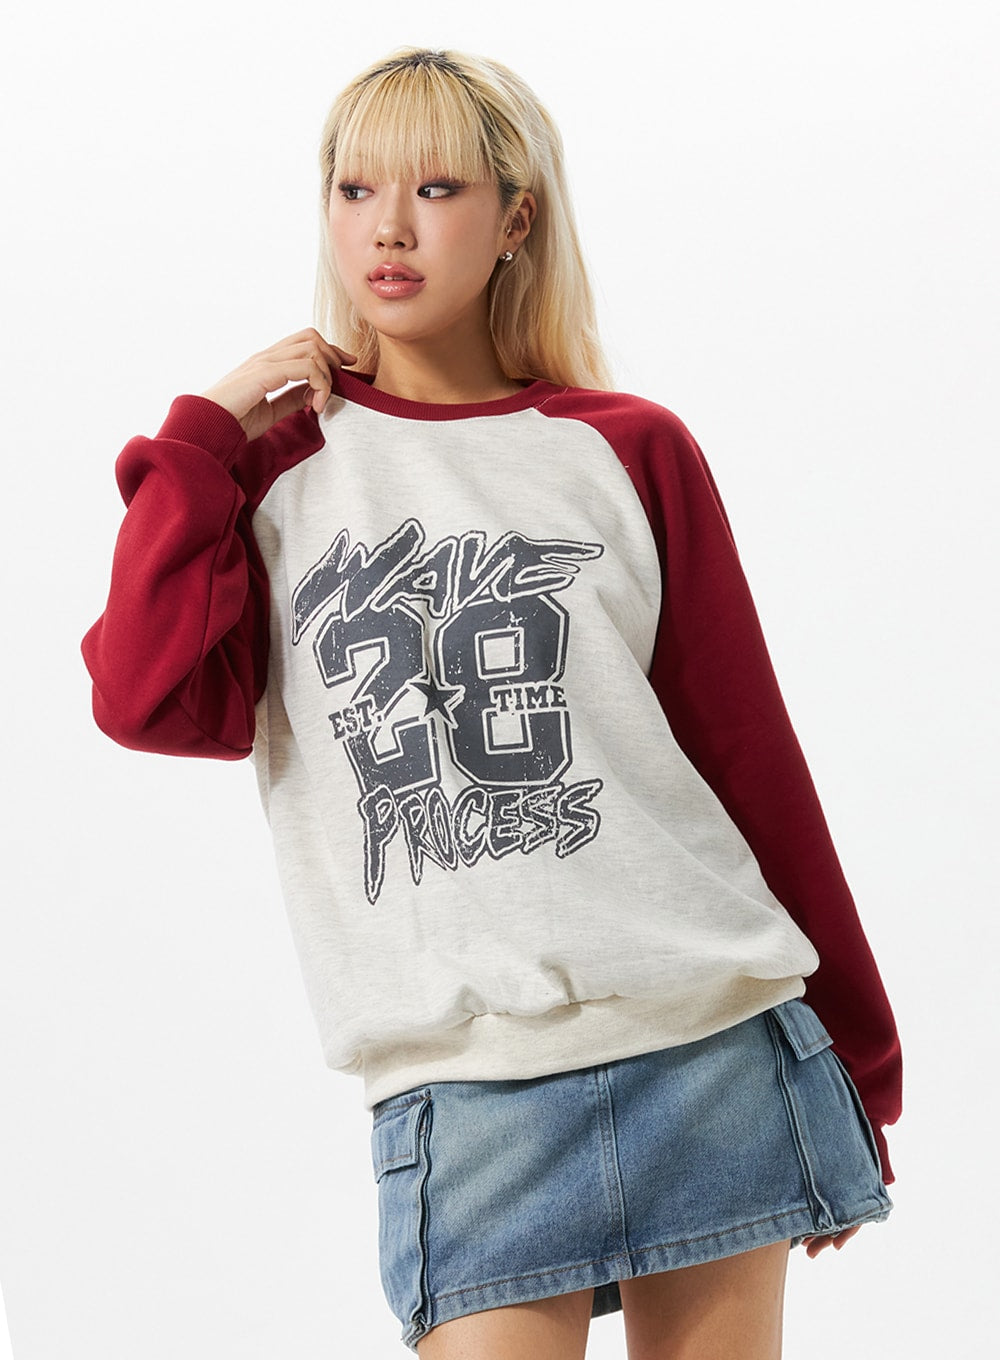 graphic-raglan-pullover-sweatshirt-io324